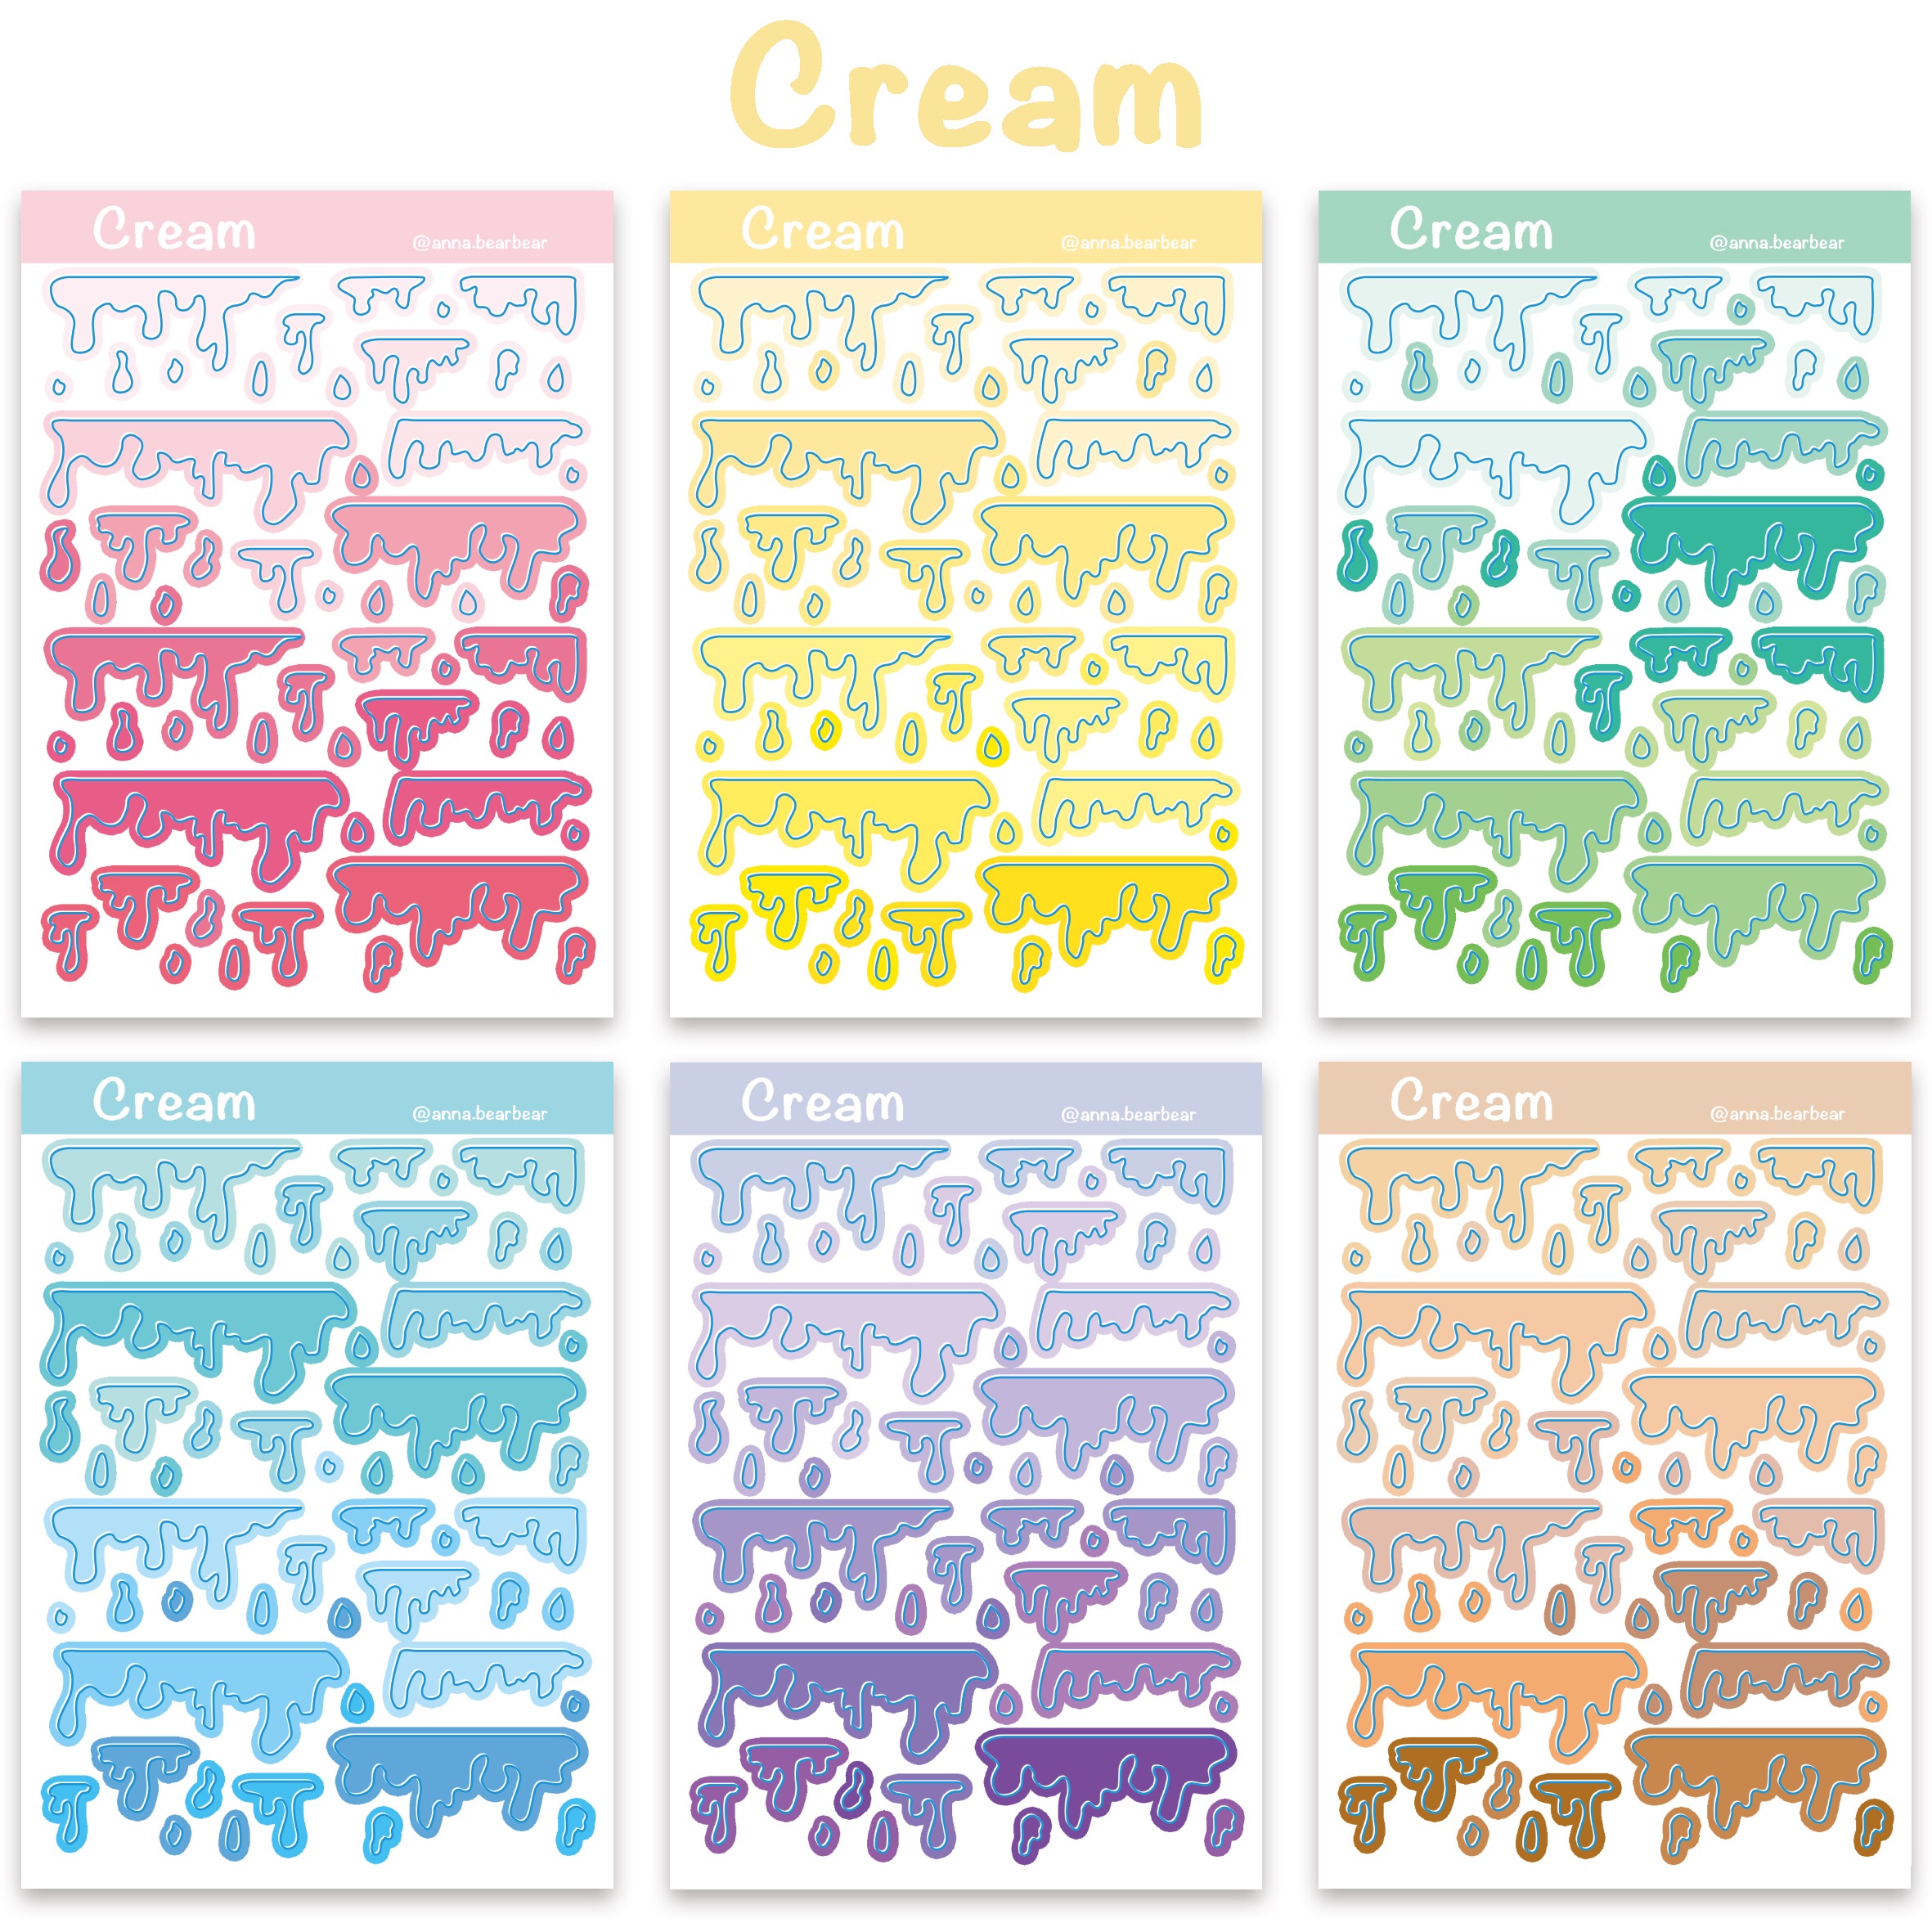 Cream系列